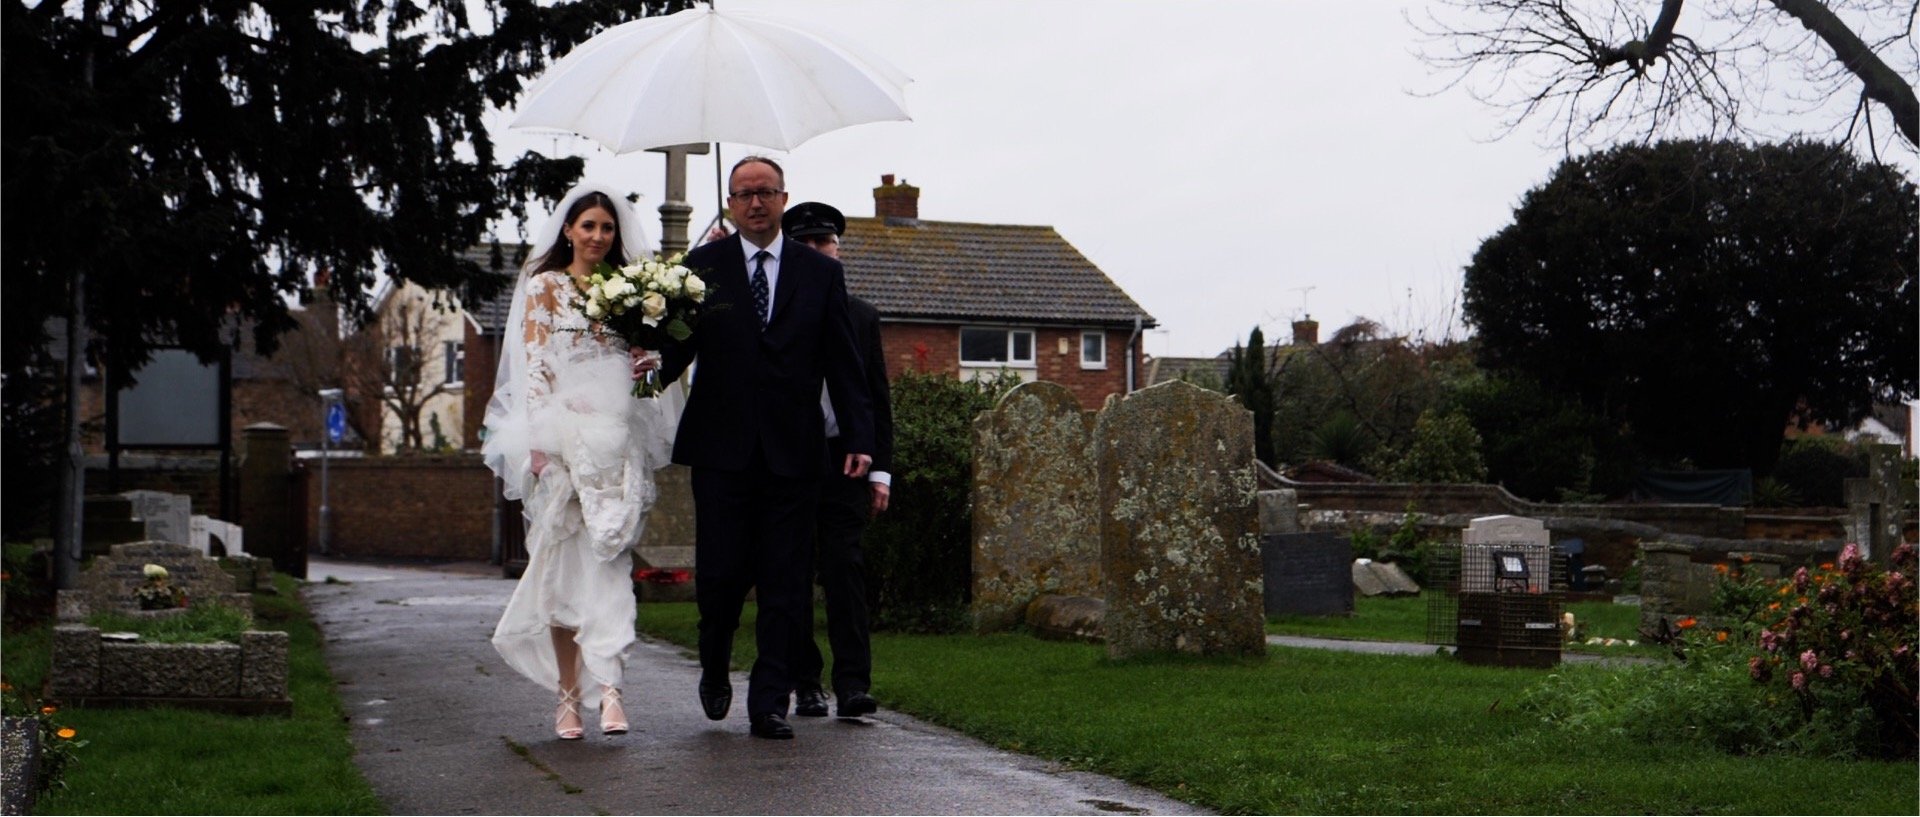 Bride arriving at church in Essex video.jpg